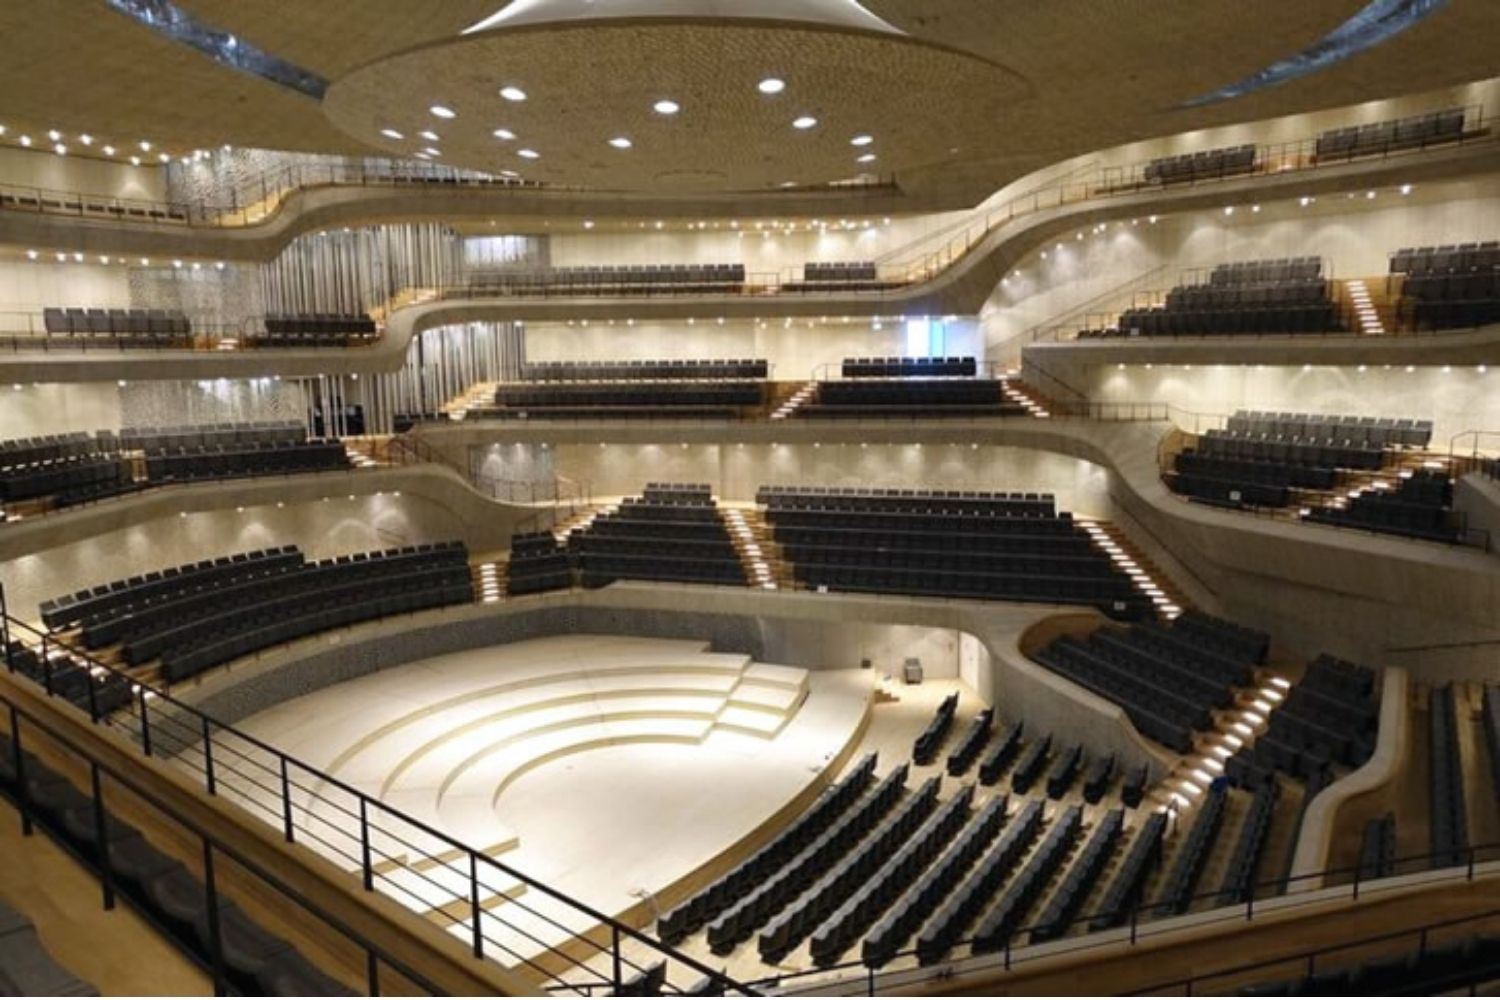 Elbphilharmonie in Hamburg, Germany. Acoustics by WSDG.